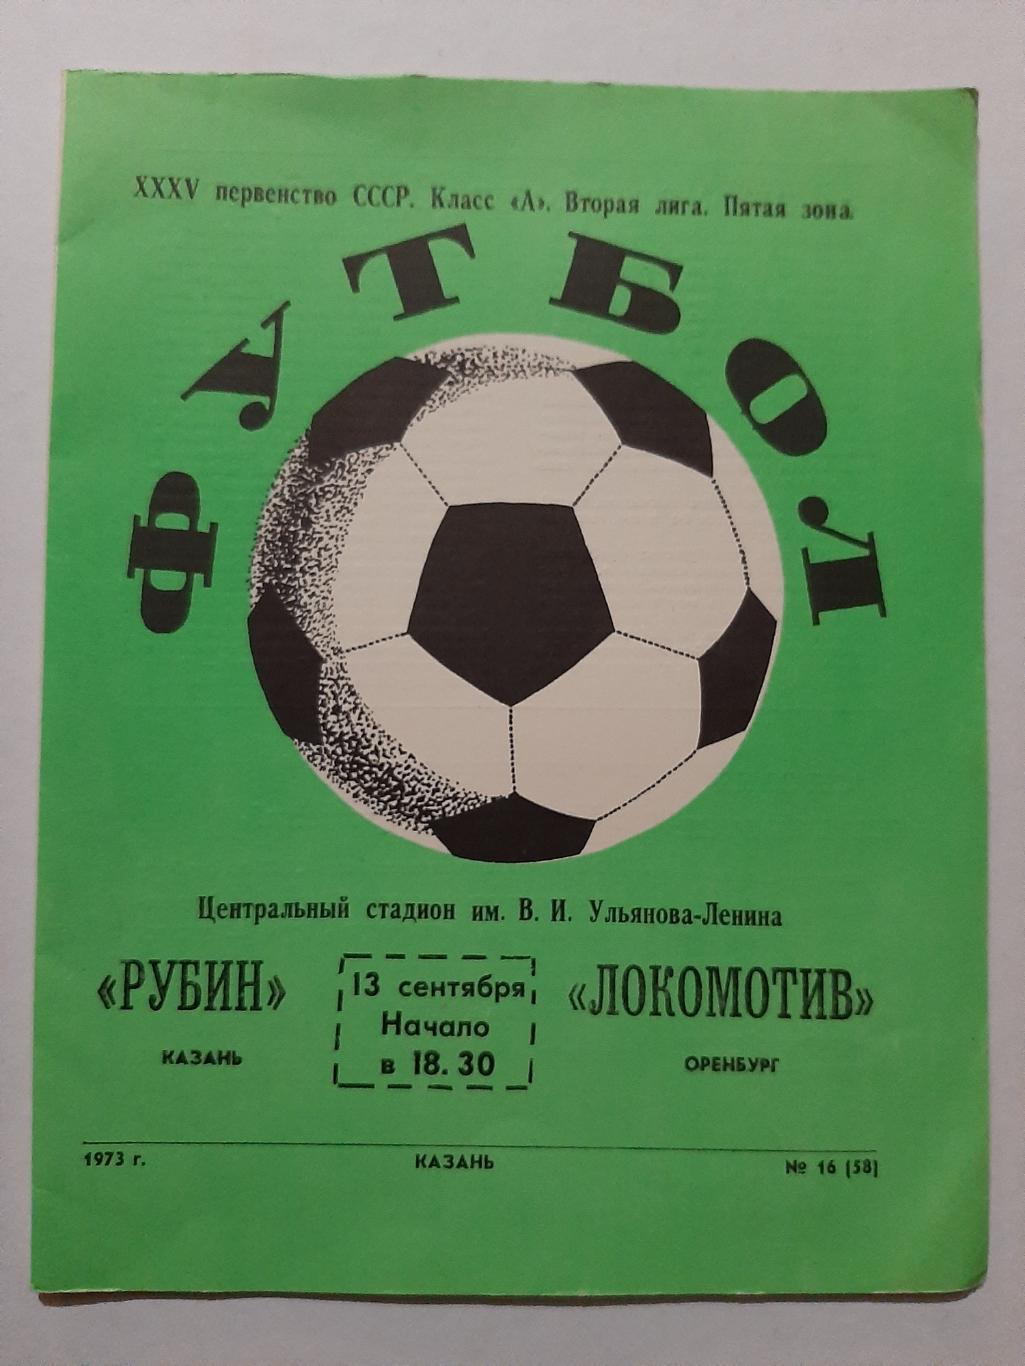 Рубин Казань - Локомотив Оренбург 13.09.1973